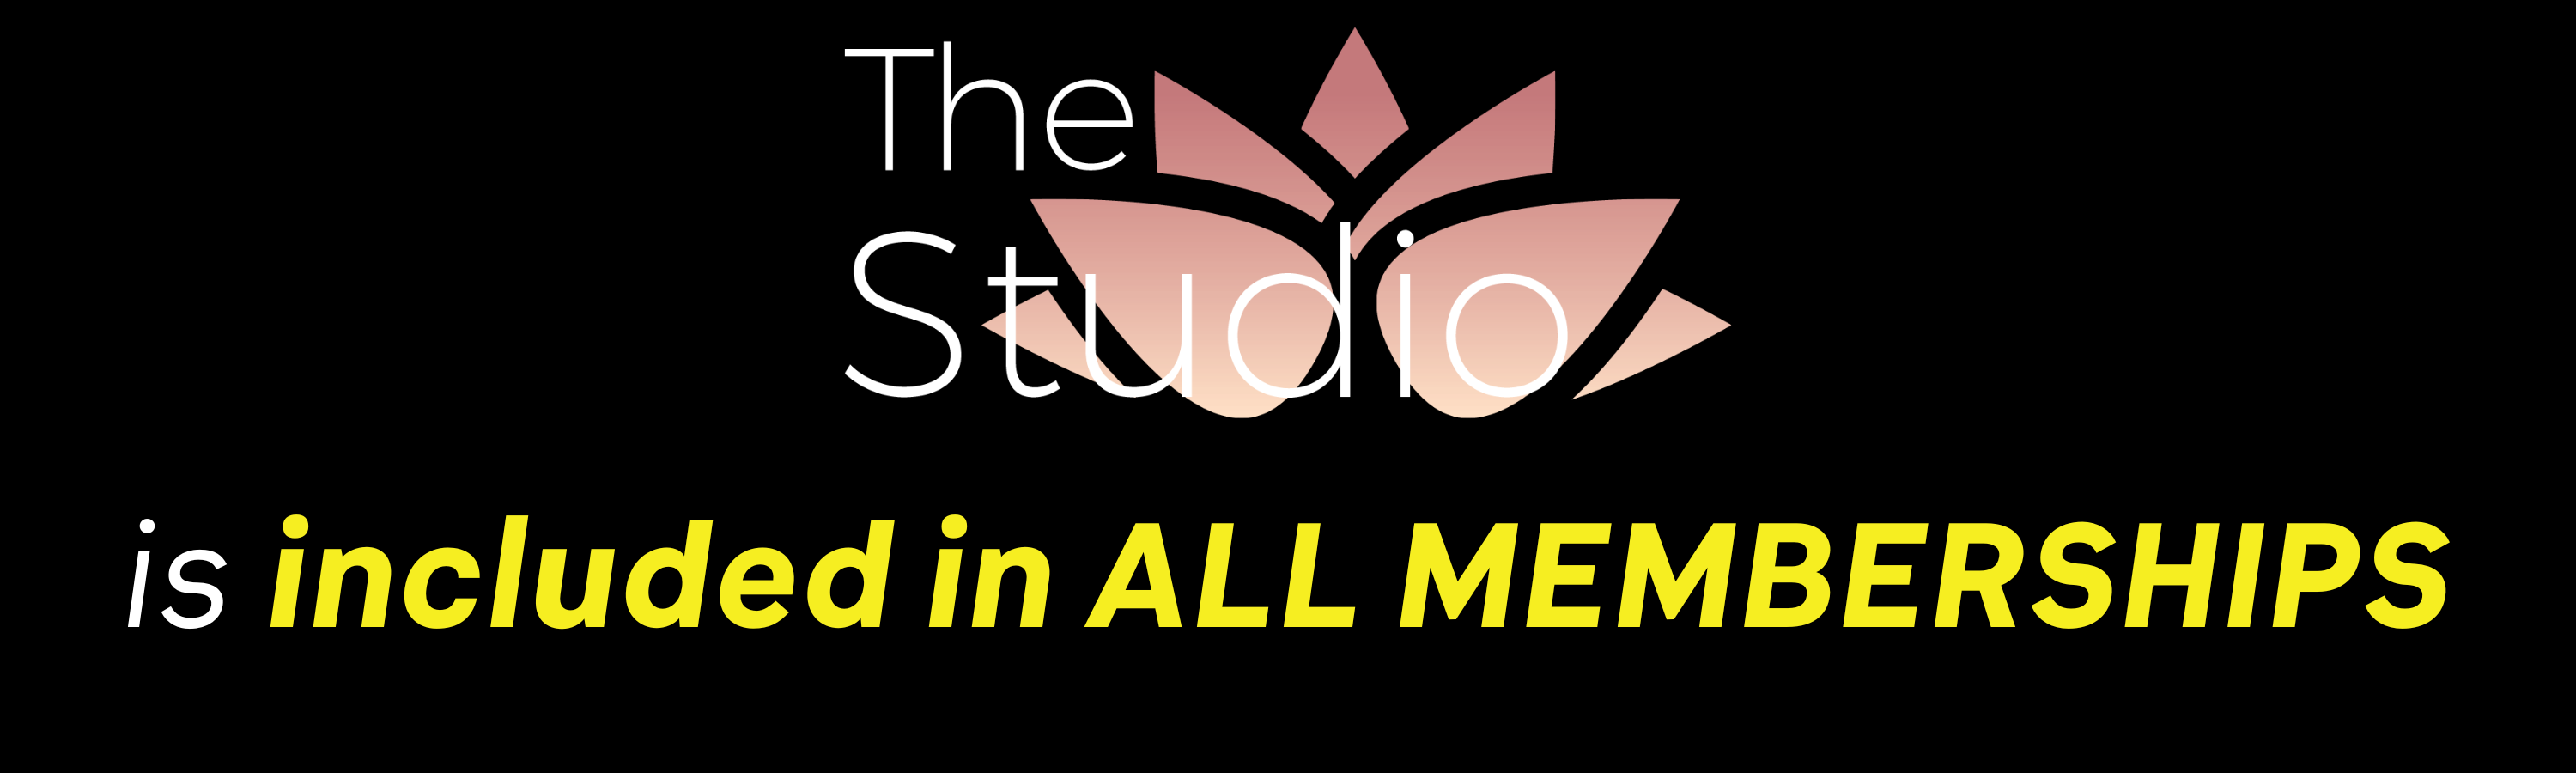 Wheaton Sport Center Membership Inclusions - The Studio Yoga classes